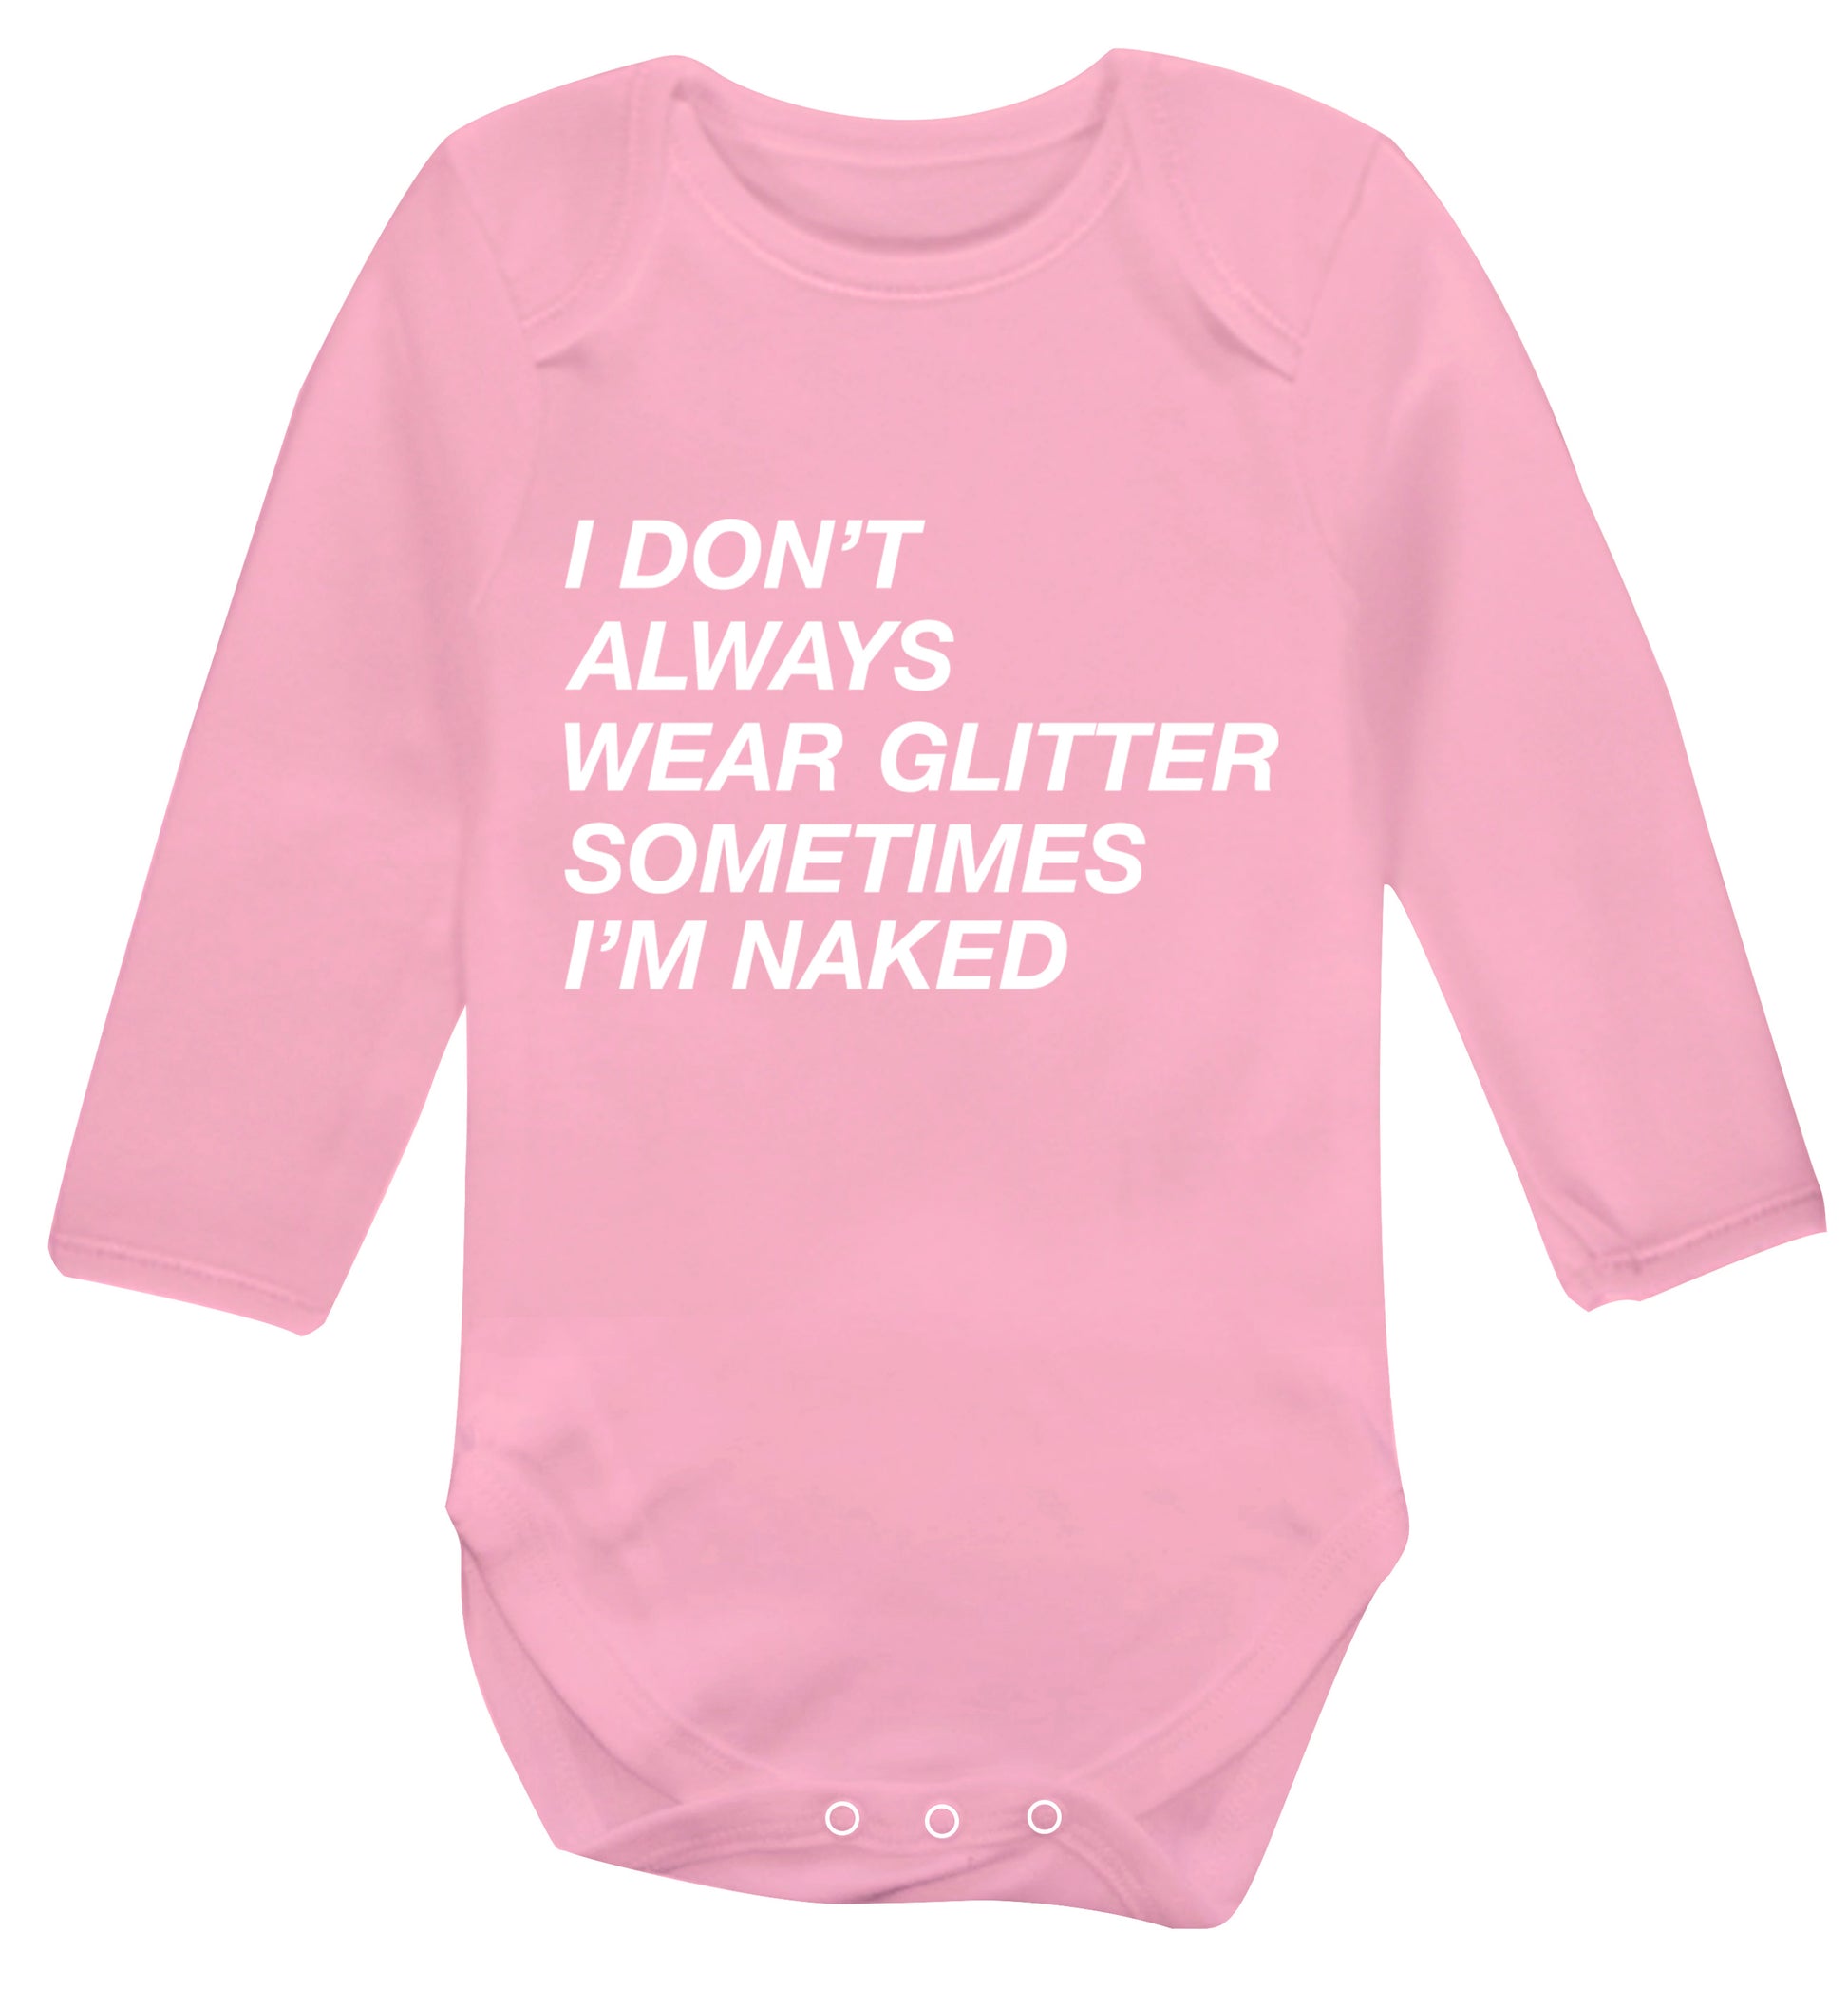 I don't always wear glitter sometimes I'm naked! Baby Vest long sleeved pale pink 6-12 months